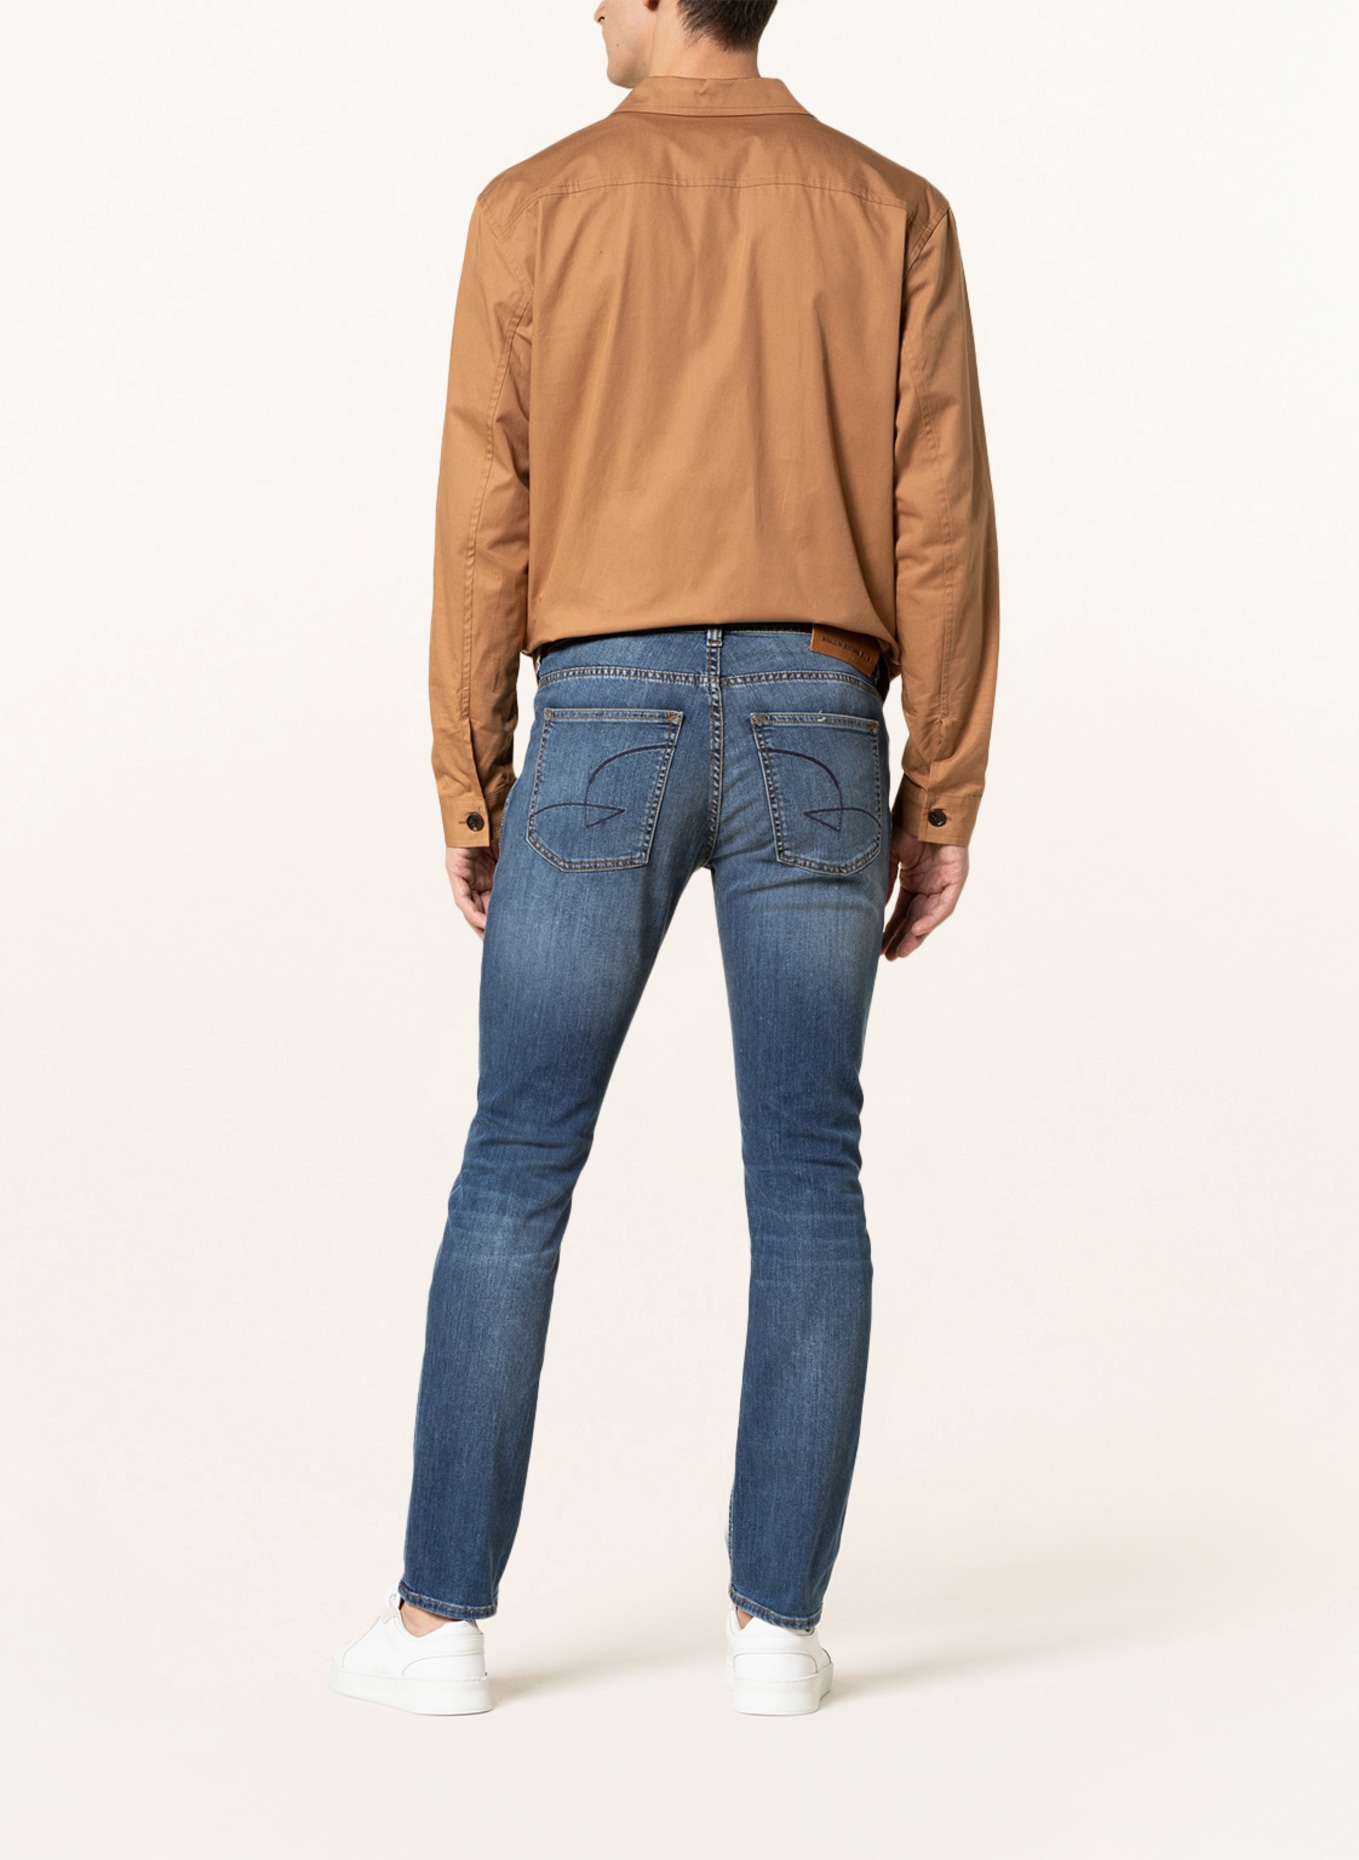 BALDESSARINI Jeans Regular Fit, Farbe: 6855 light blue used buffies (Bild 3)